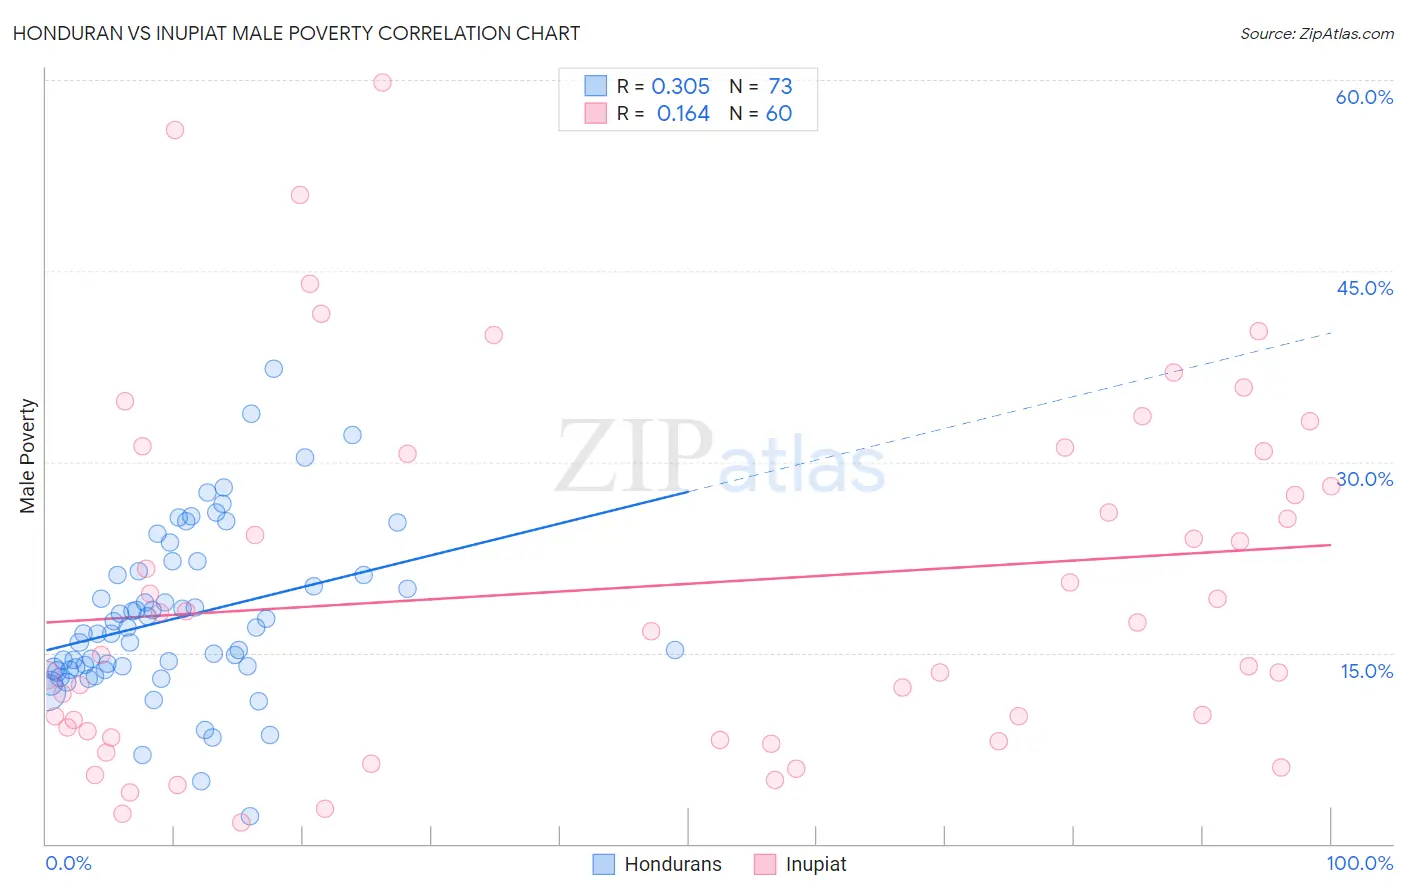 Honduran vs Inupiat Male Poverty